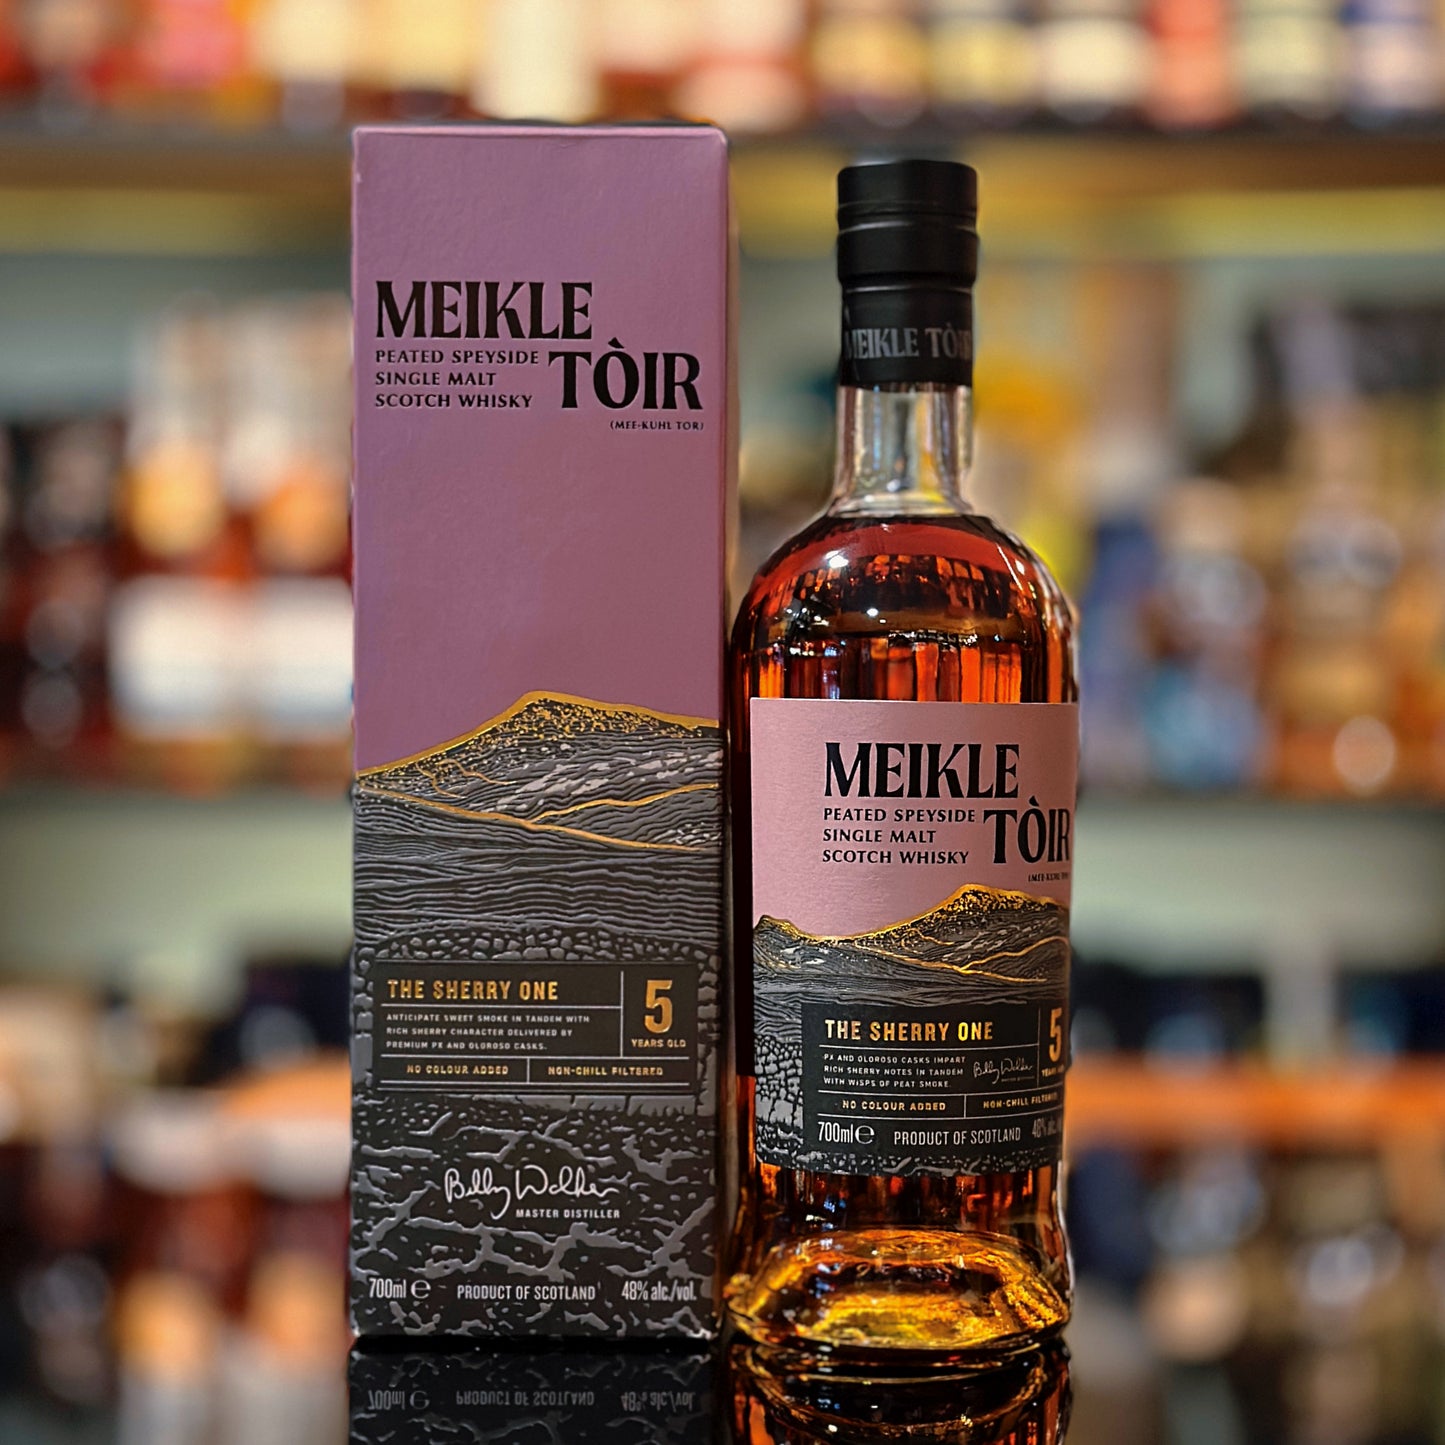 Meikle Tòir 5 Year Old “The Sherry” Single Malt Scotch Whisky